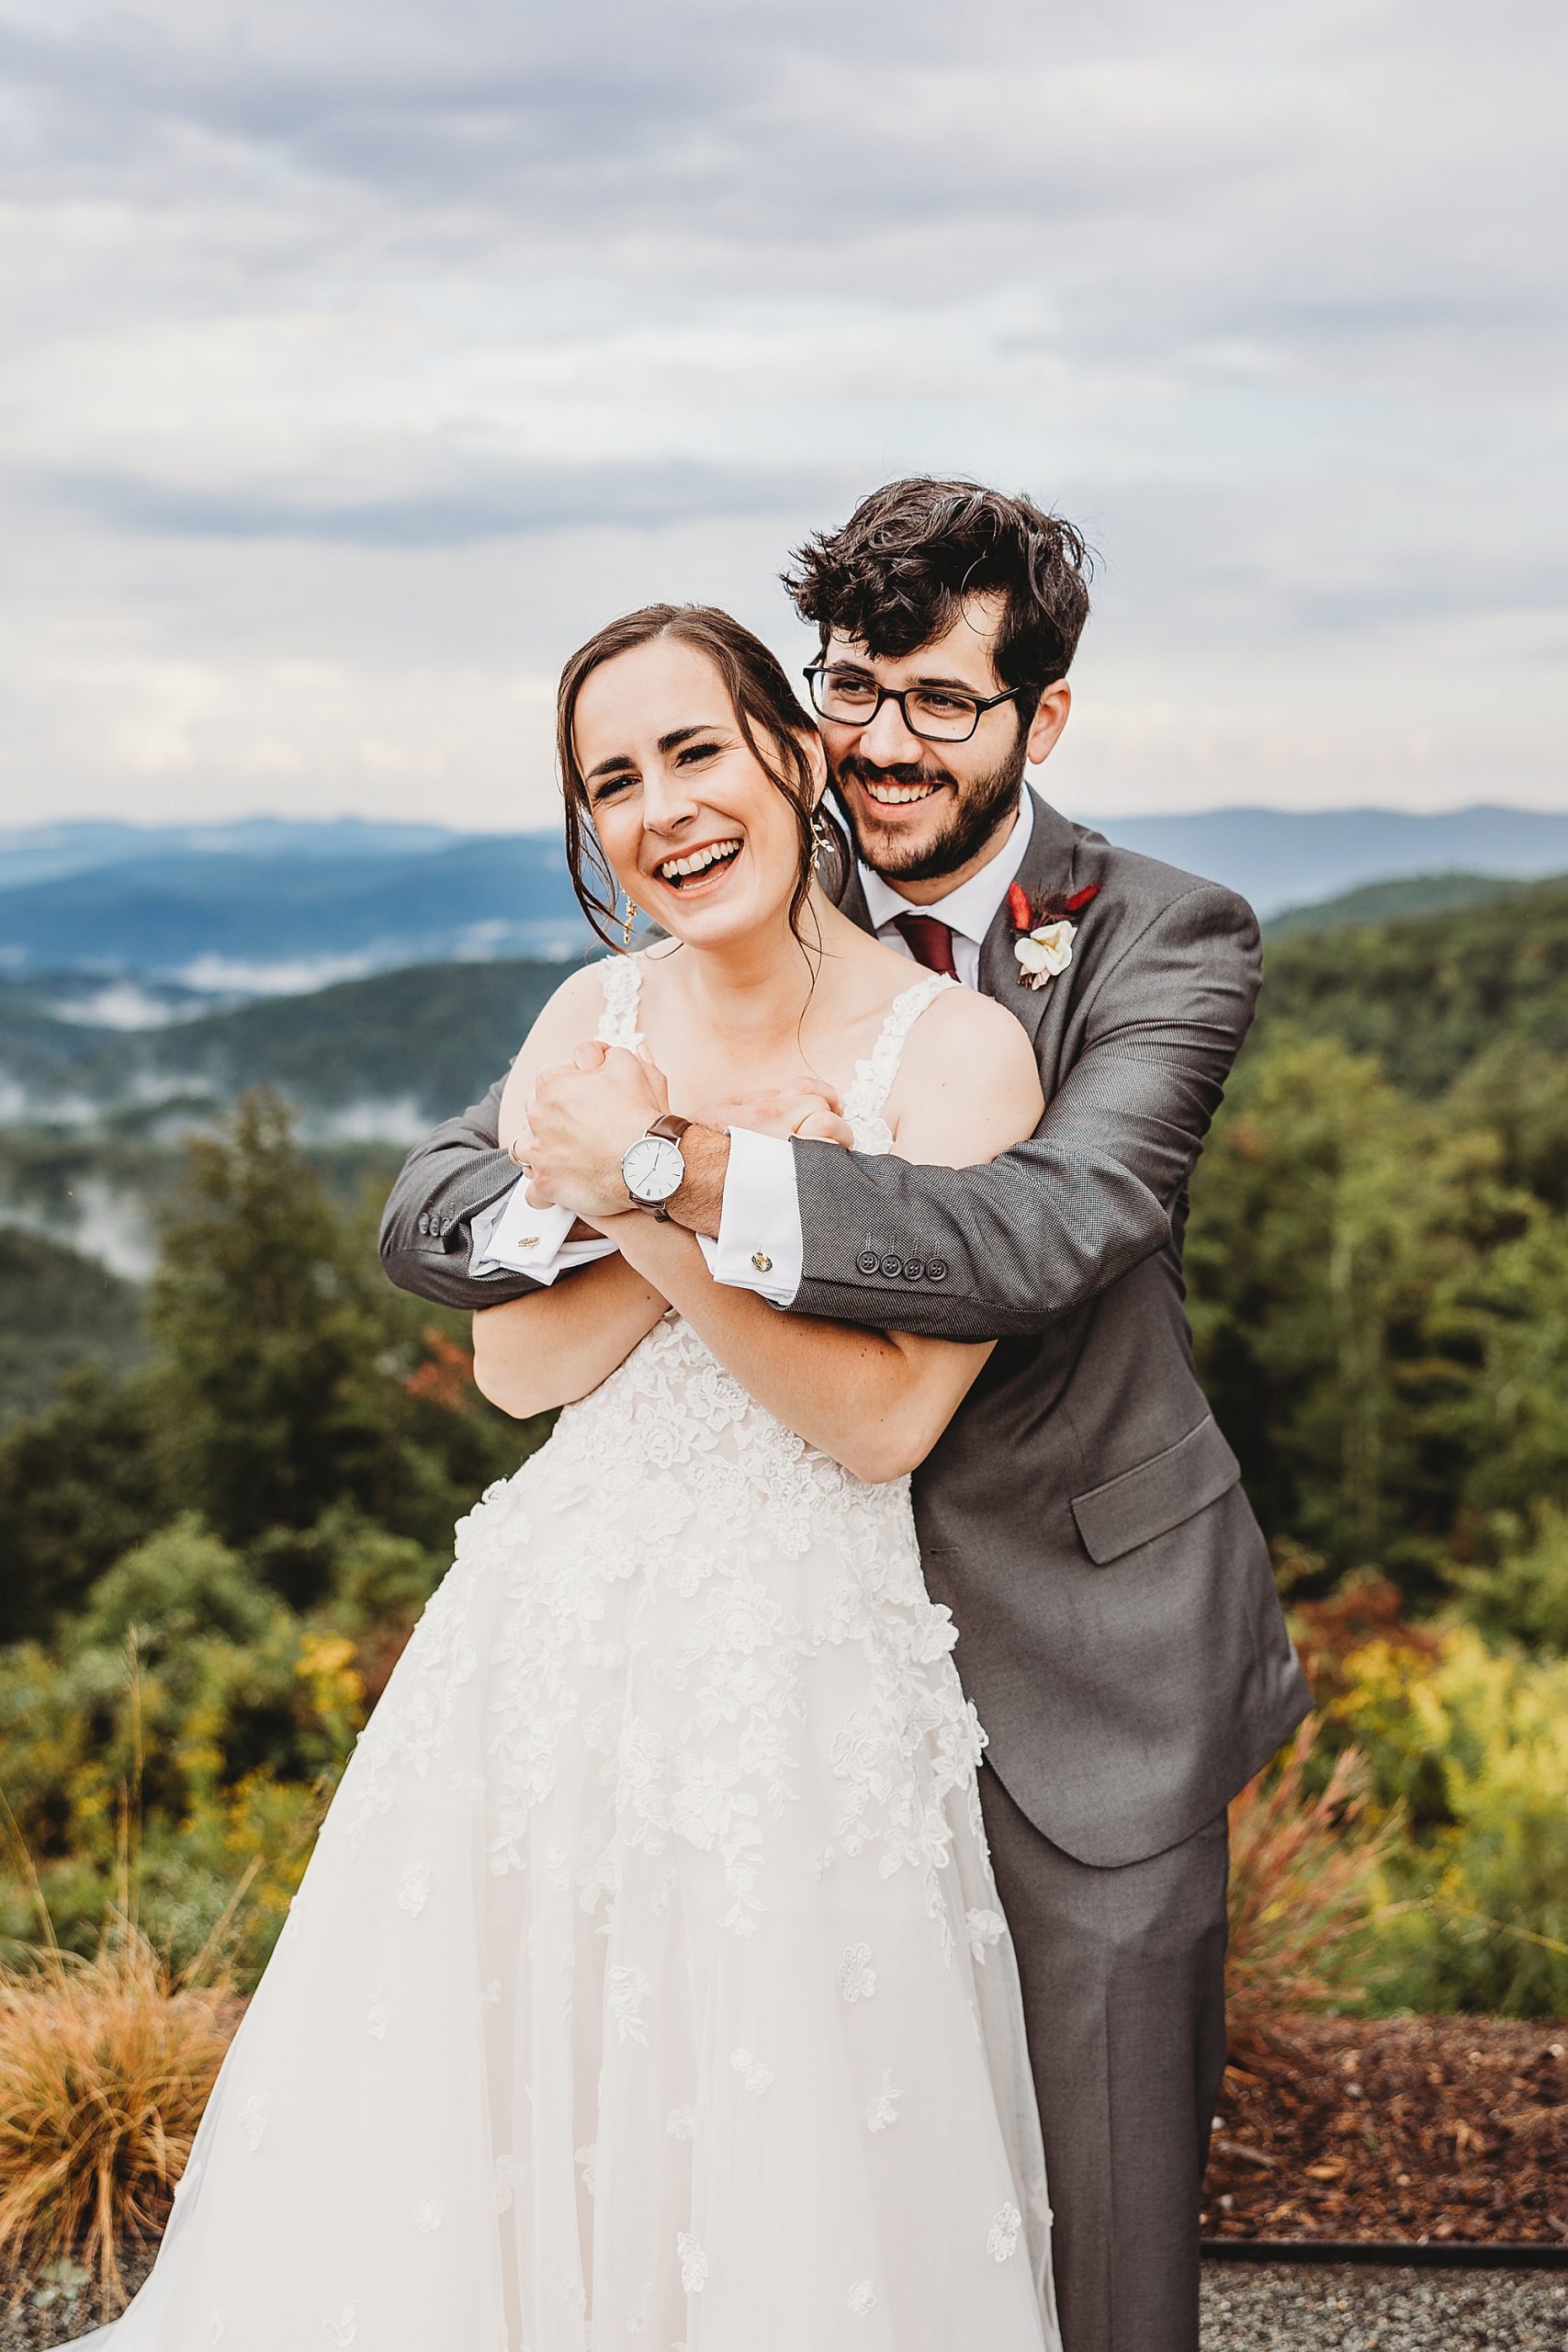 Dawn Marie Photography weddings; mountain weddings